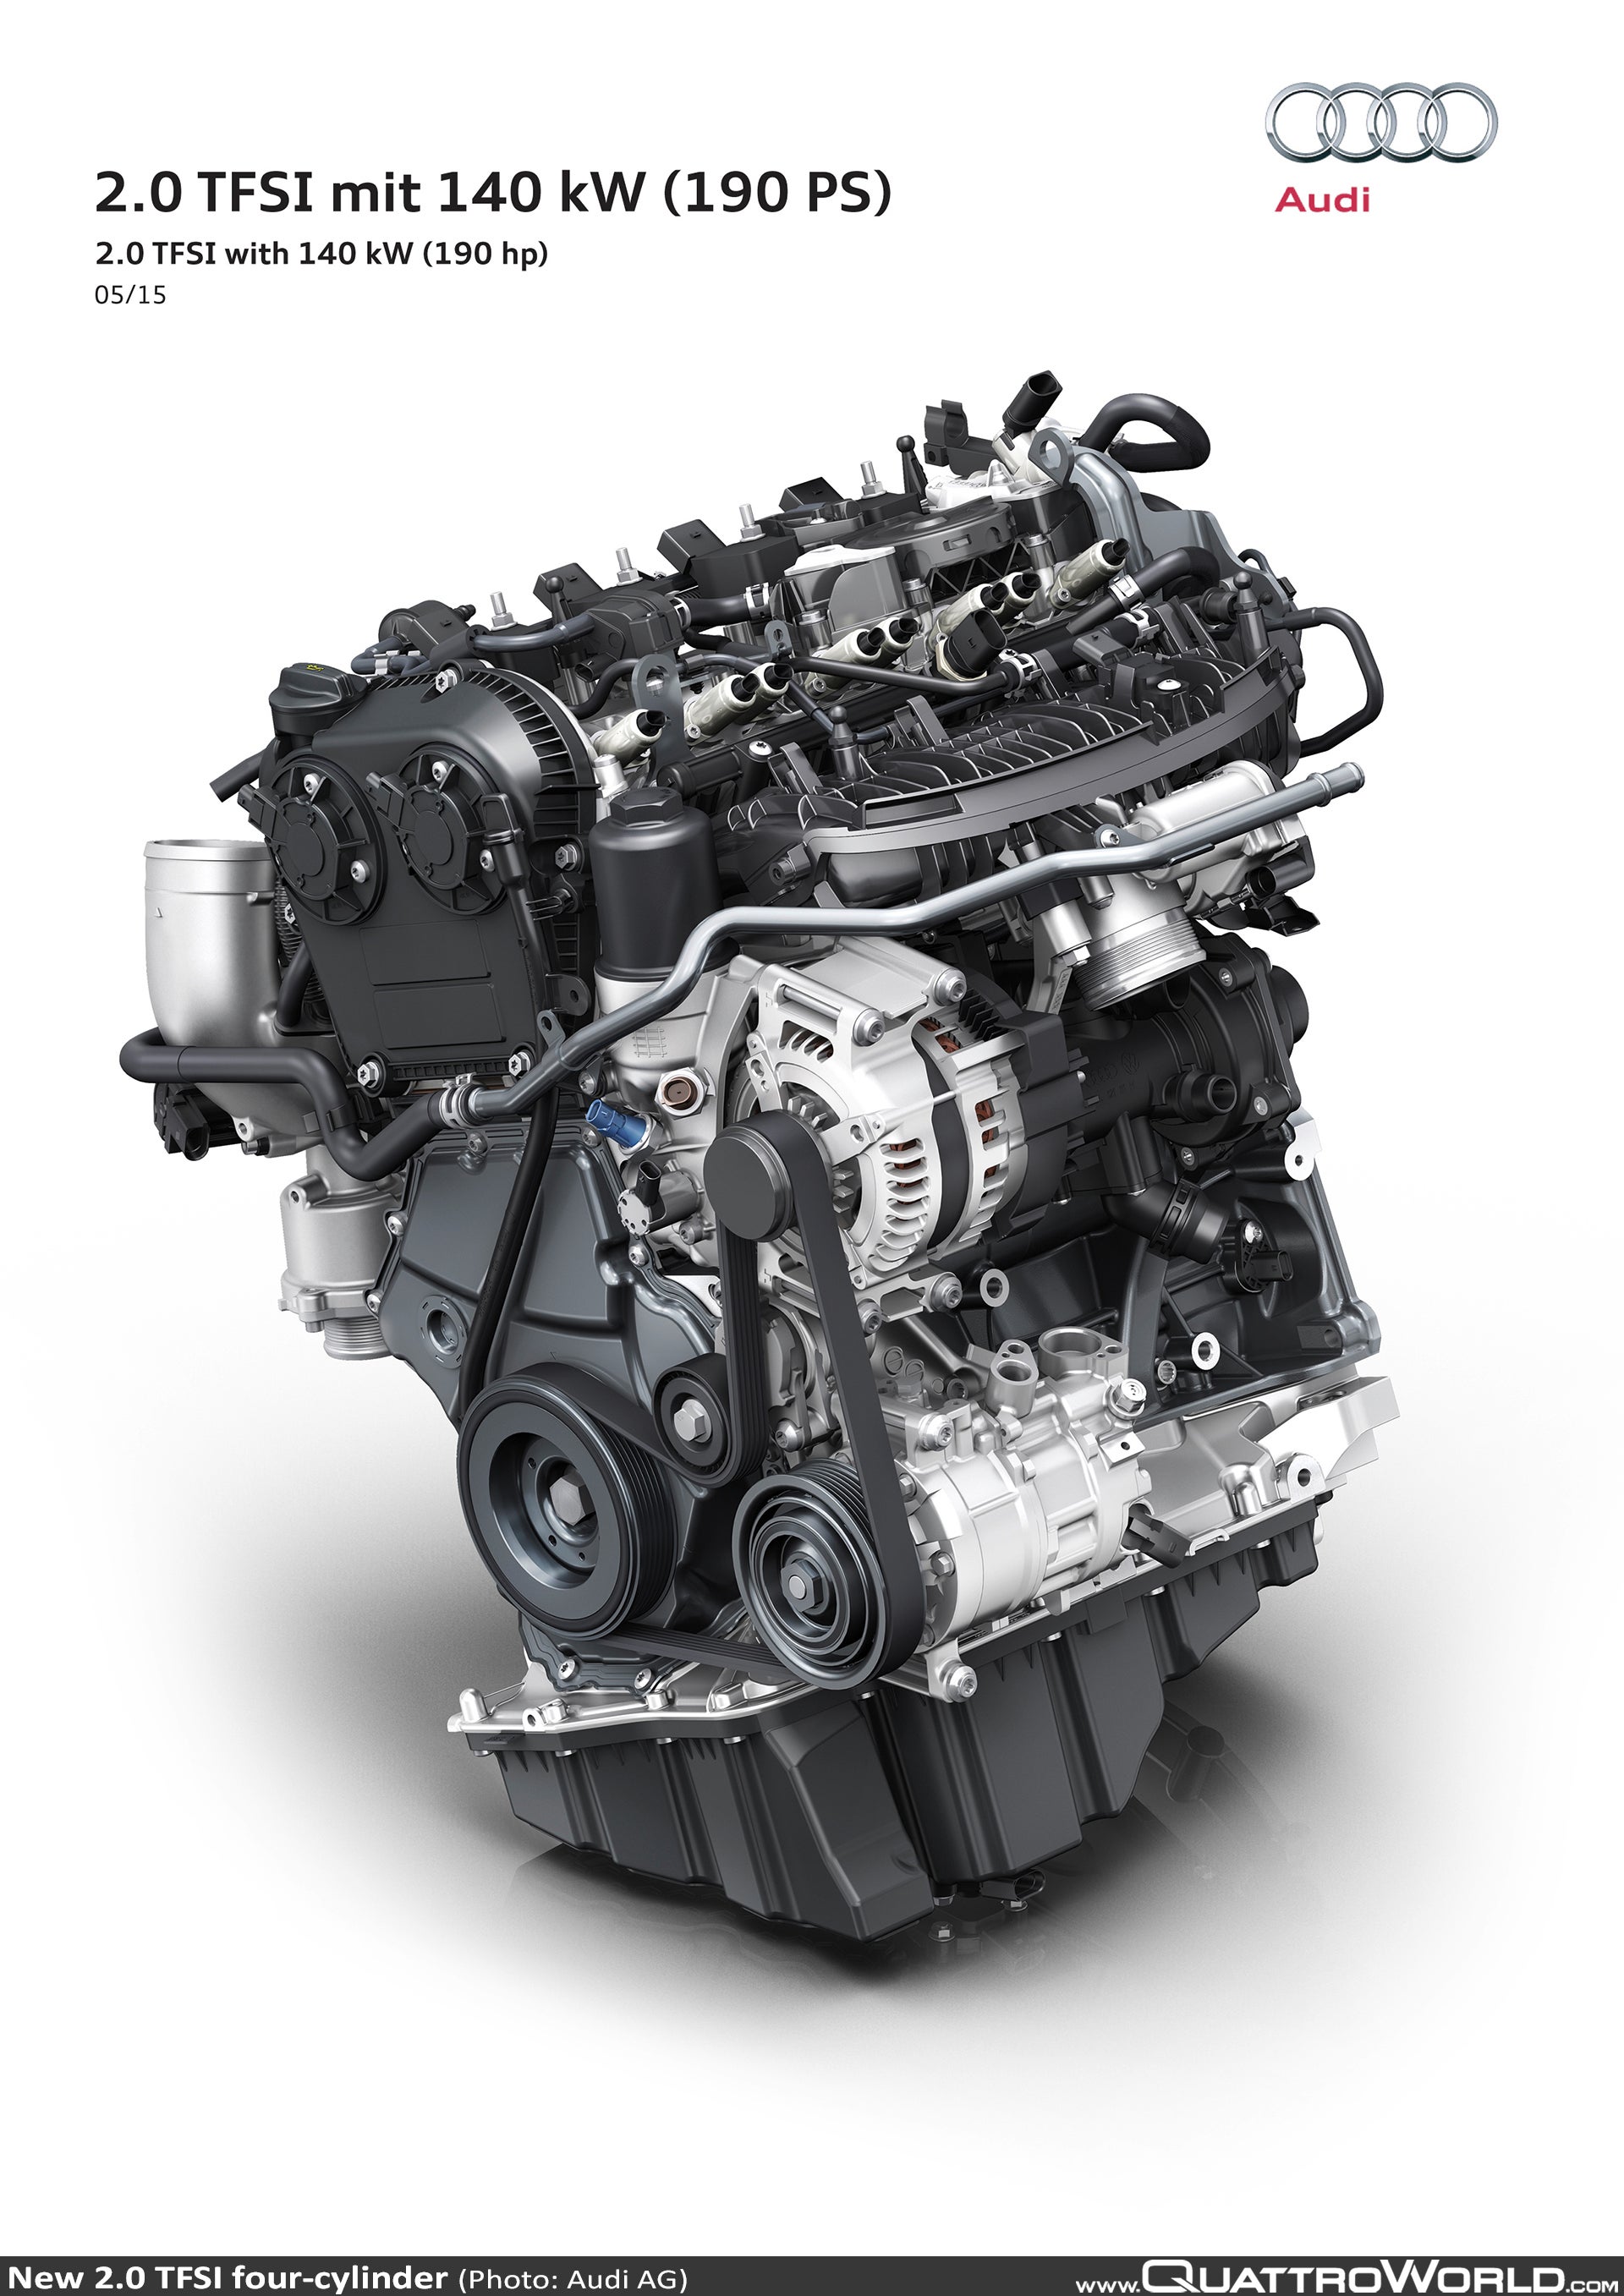 2016 B9 Audi A4 2.0 TFSI Engine in detail - QuattroWorld